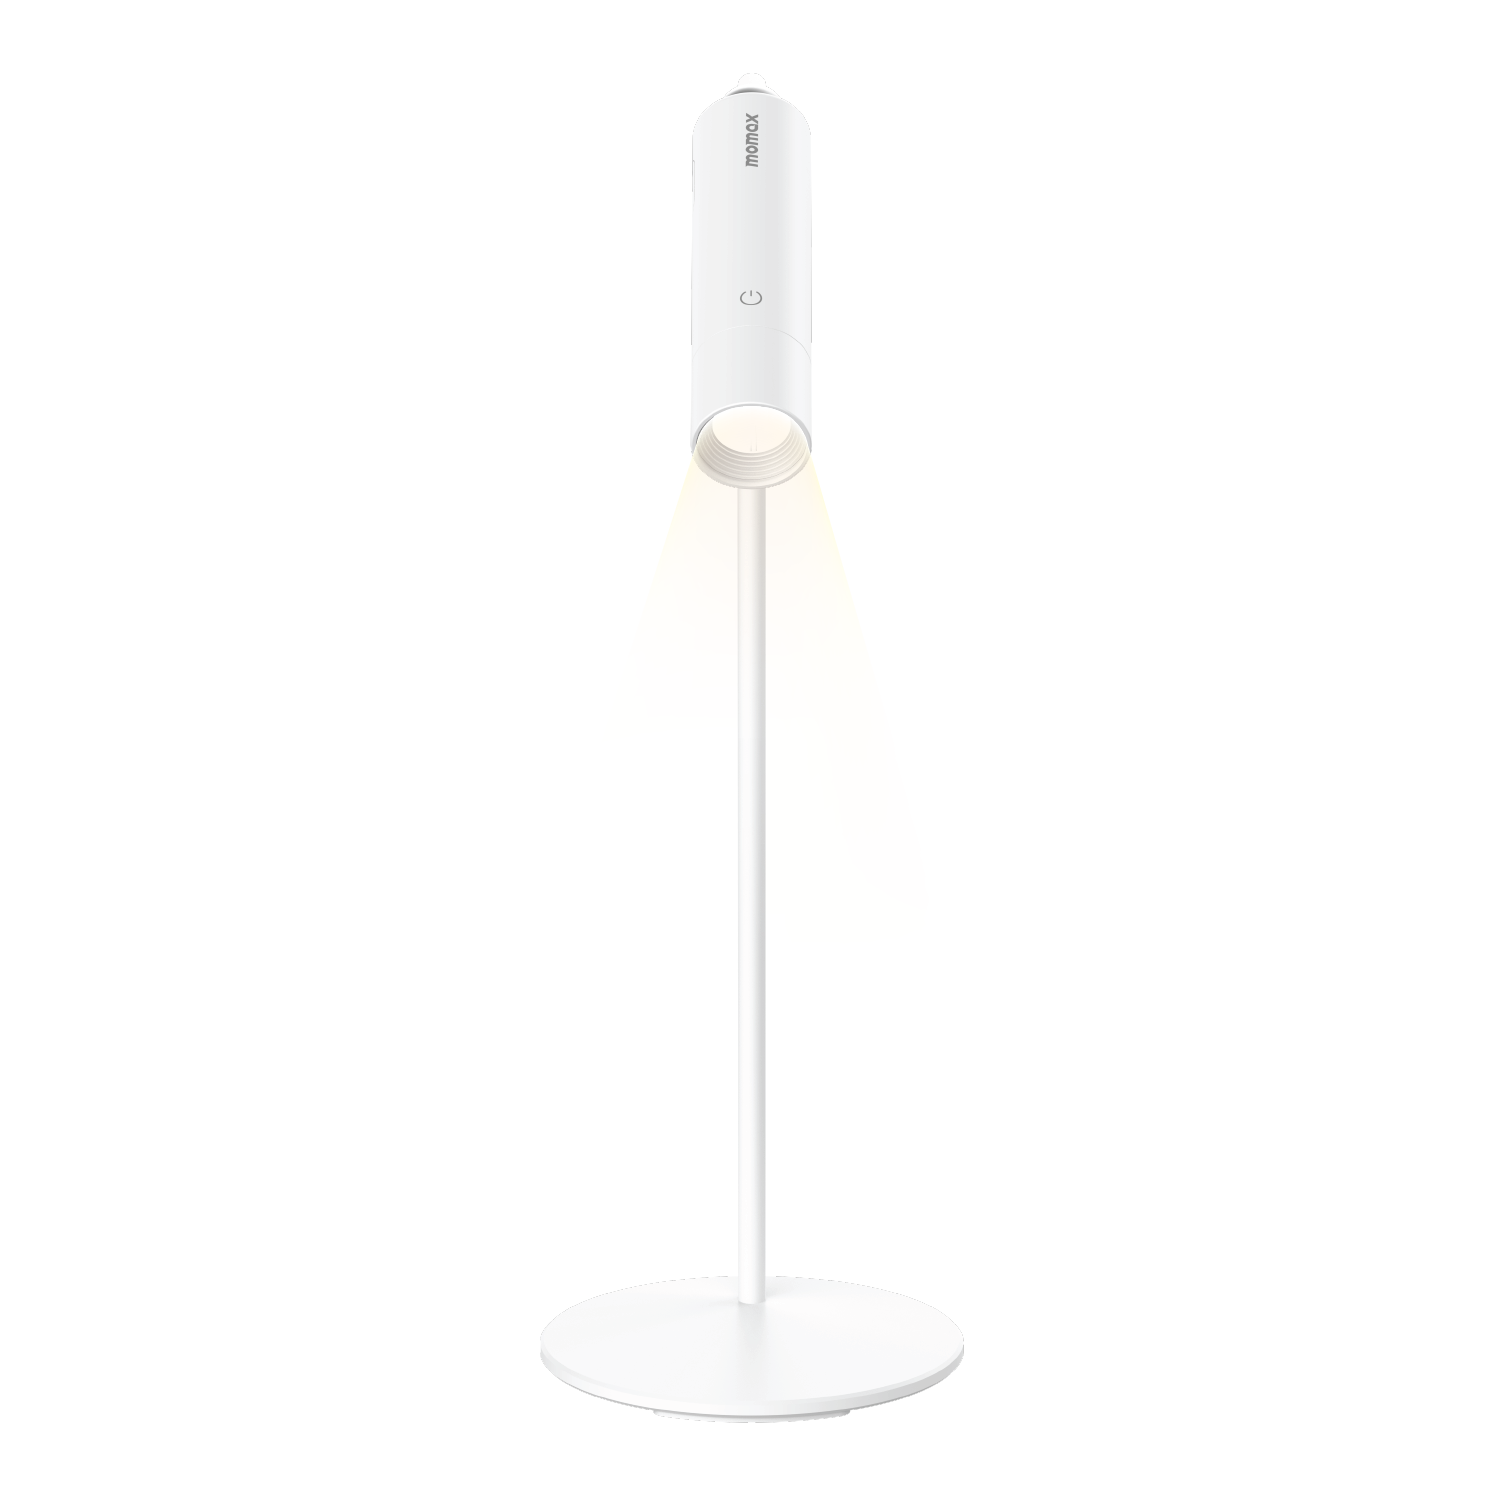 SnapLux Portable LED Lamp